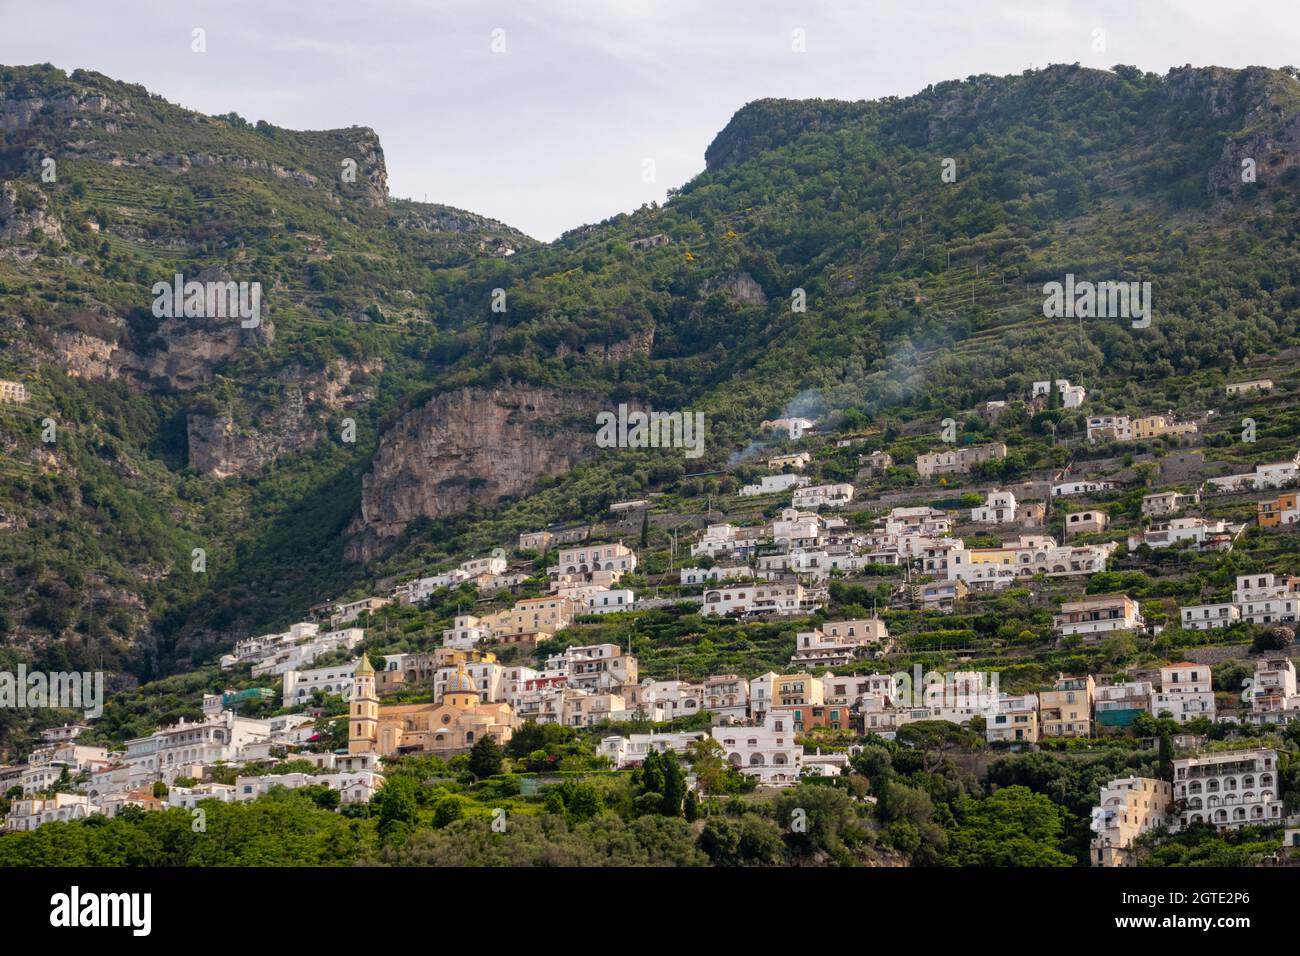 Vista de la costa de Amalfi cerca de la ciudad de Amalfi, Salerno, Campanis, Italia Foto de stock